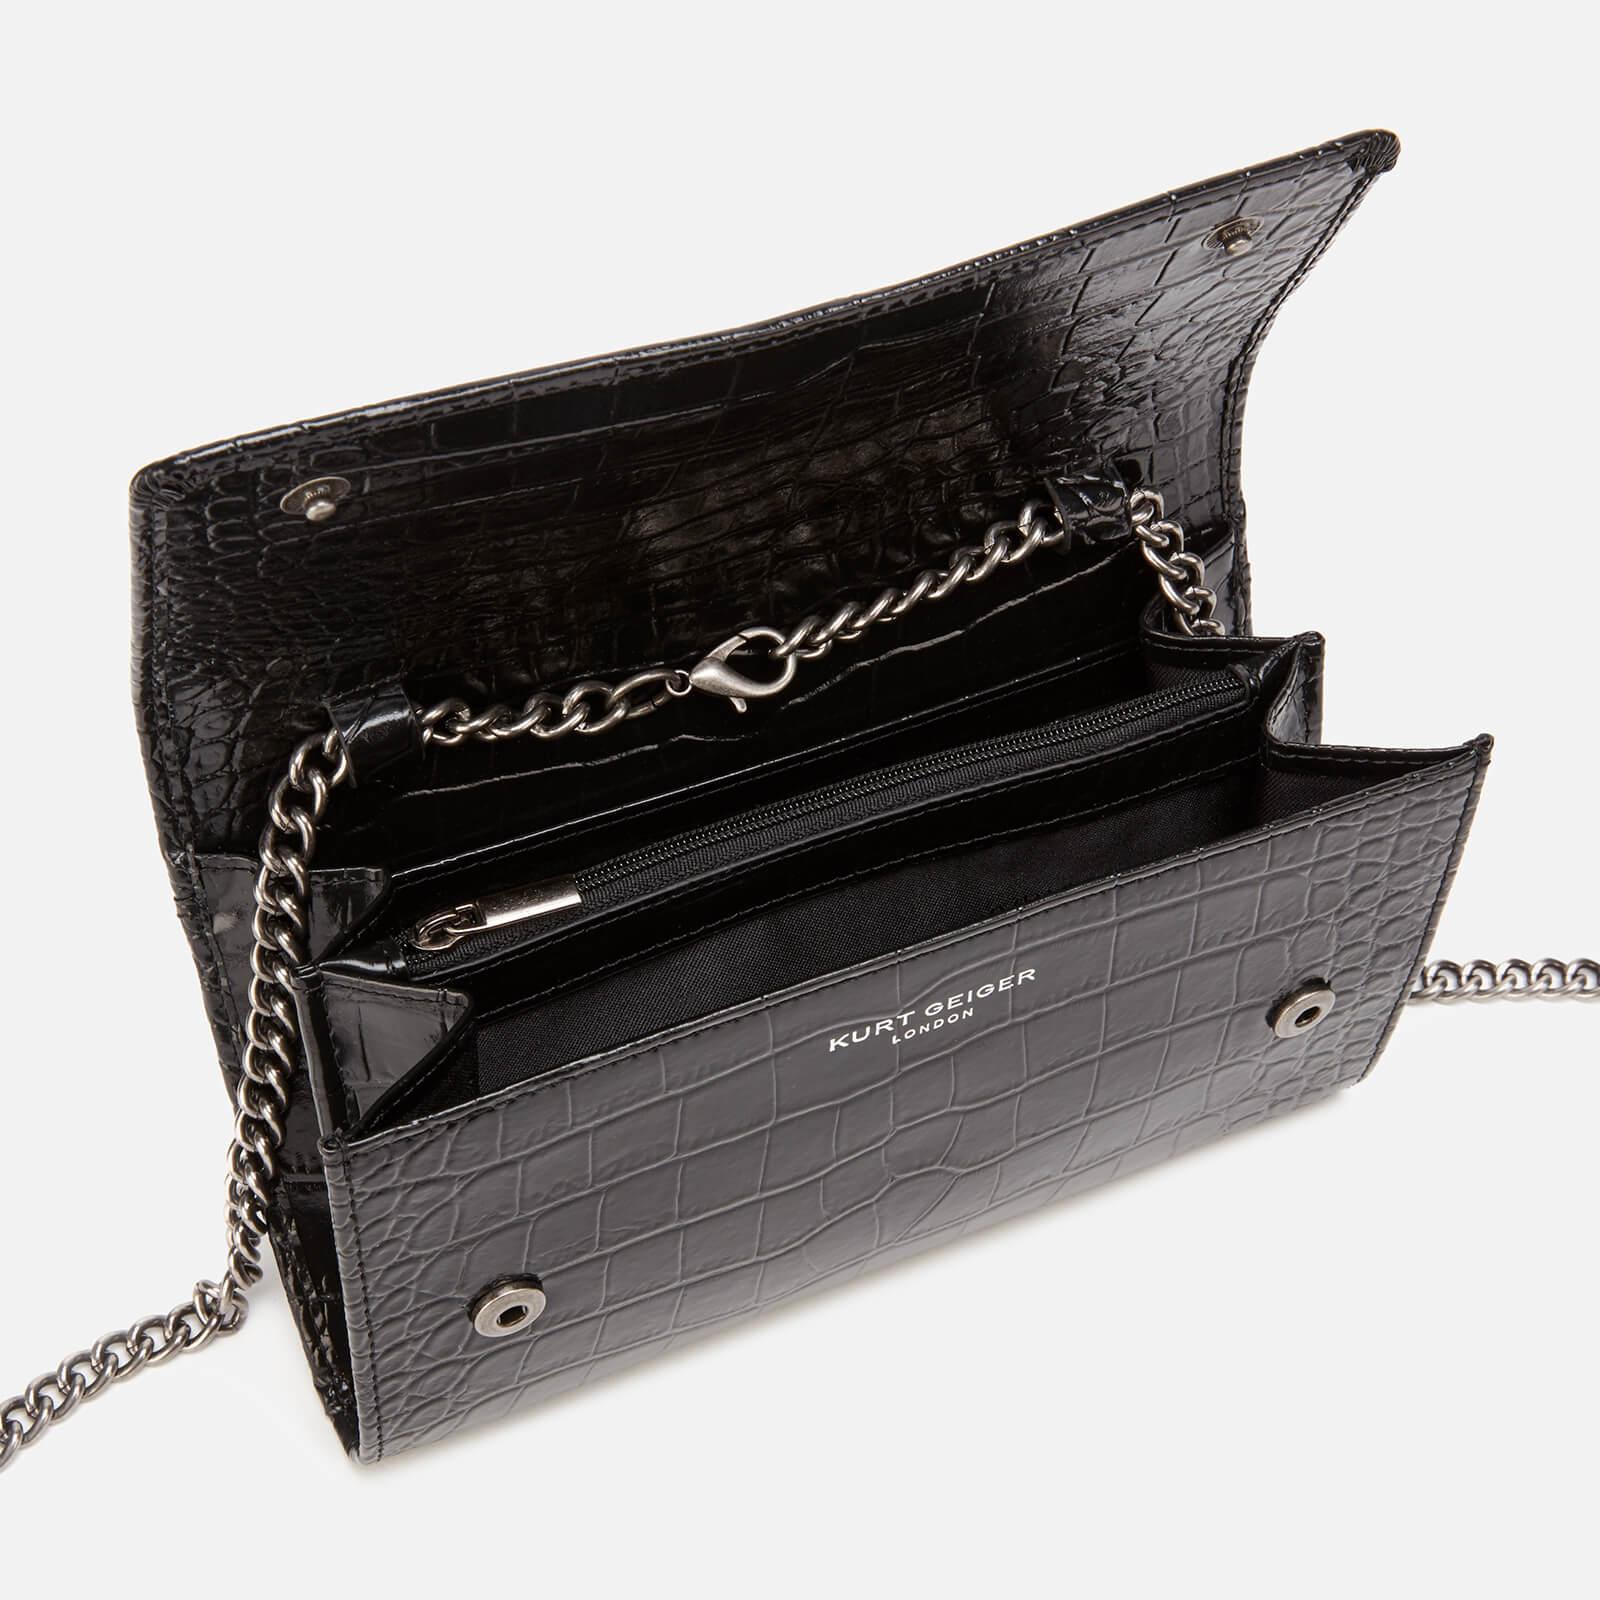 KENSINGTON CHAIN WALLET C Black Quilted Clutch Bag by KURT GEIGER